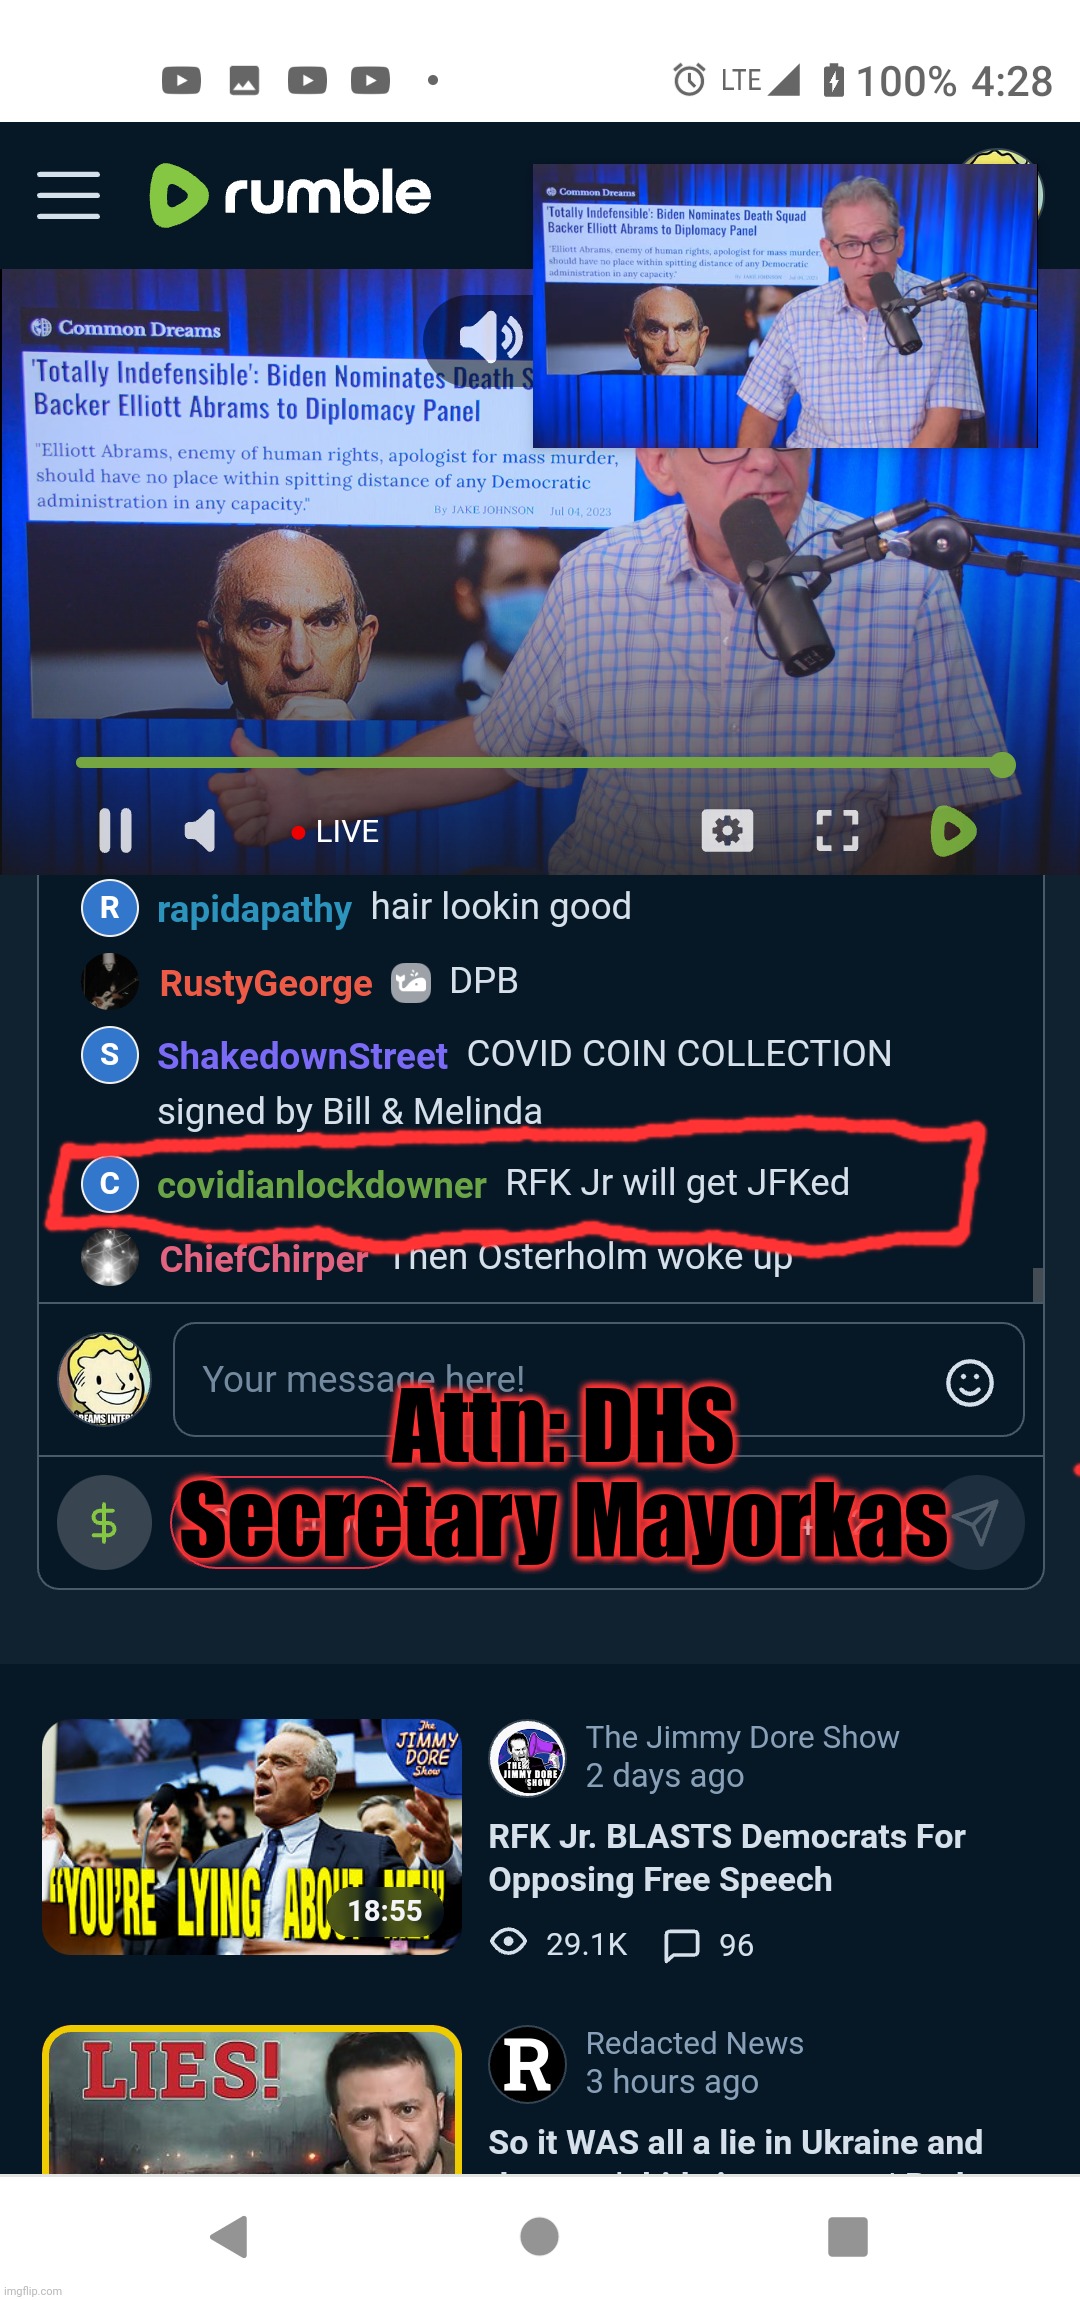 Attn: DHS Secretary Mayorkas | made w/ Imgflip meme maker